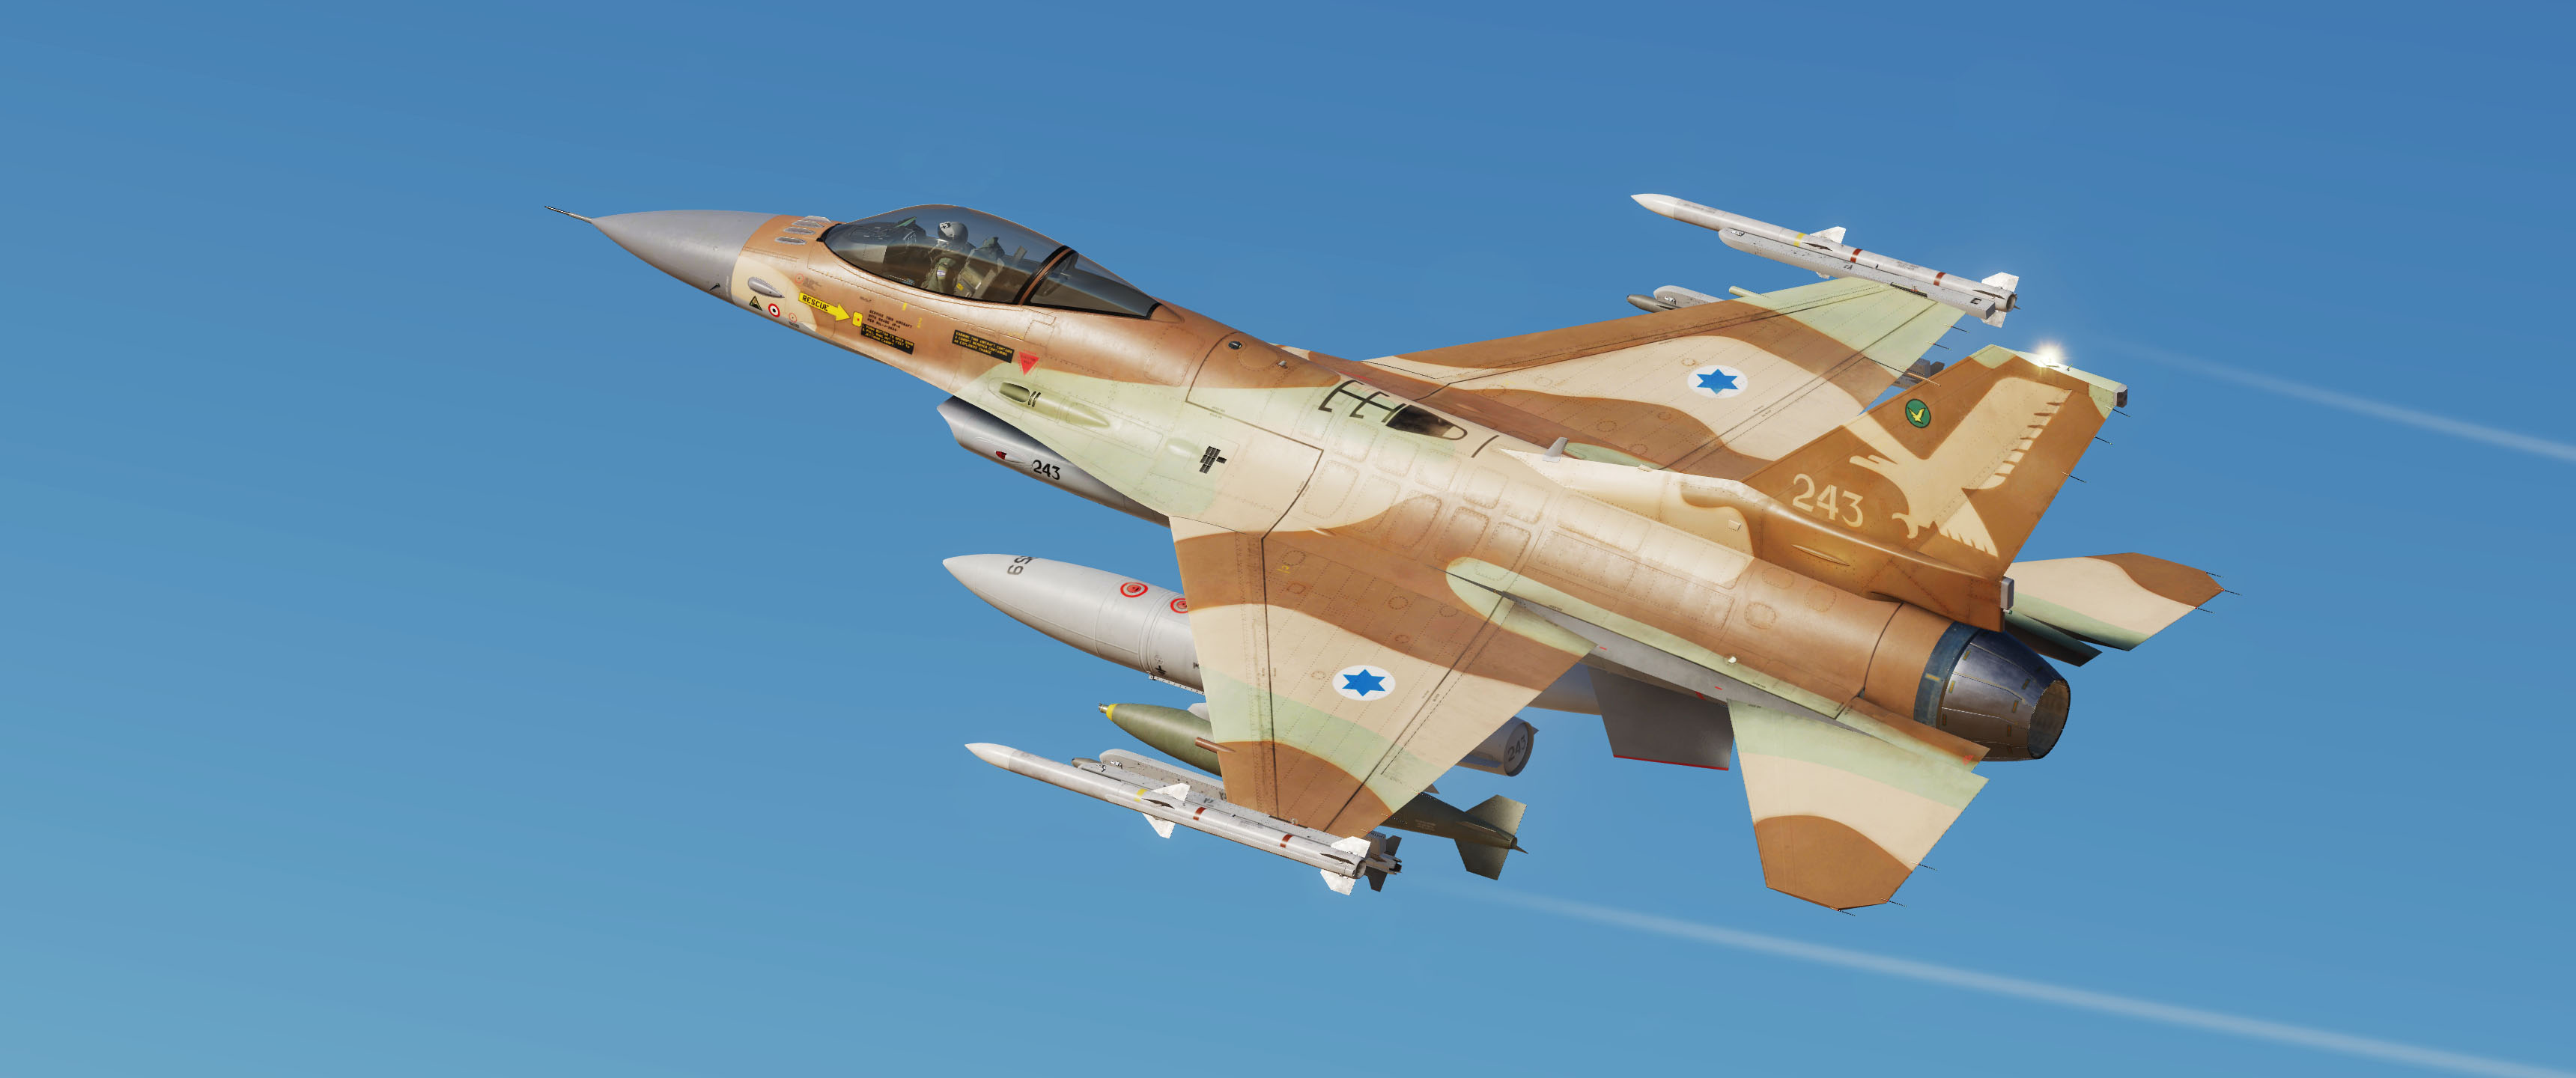 IAF F16A Netz 243 - 140 squadron - Golden Eagle